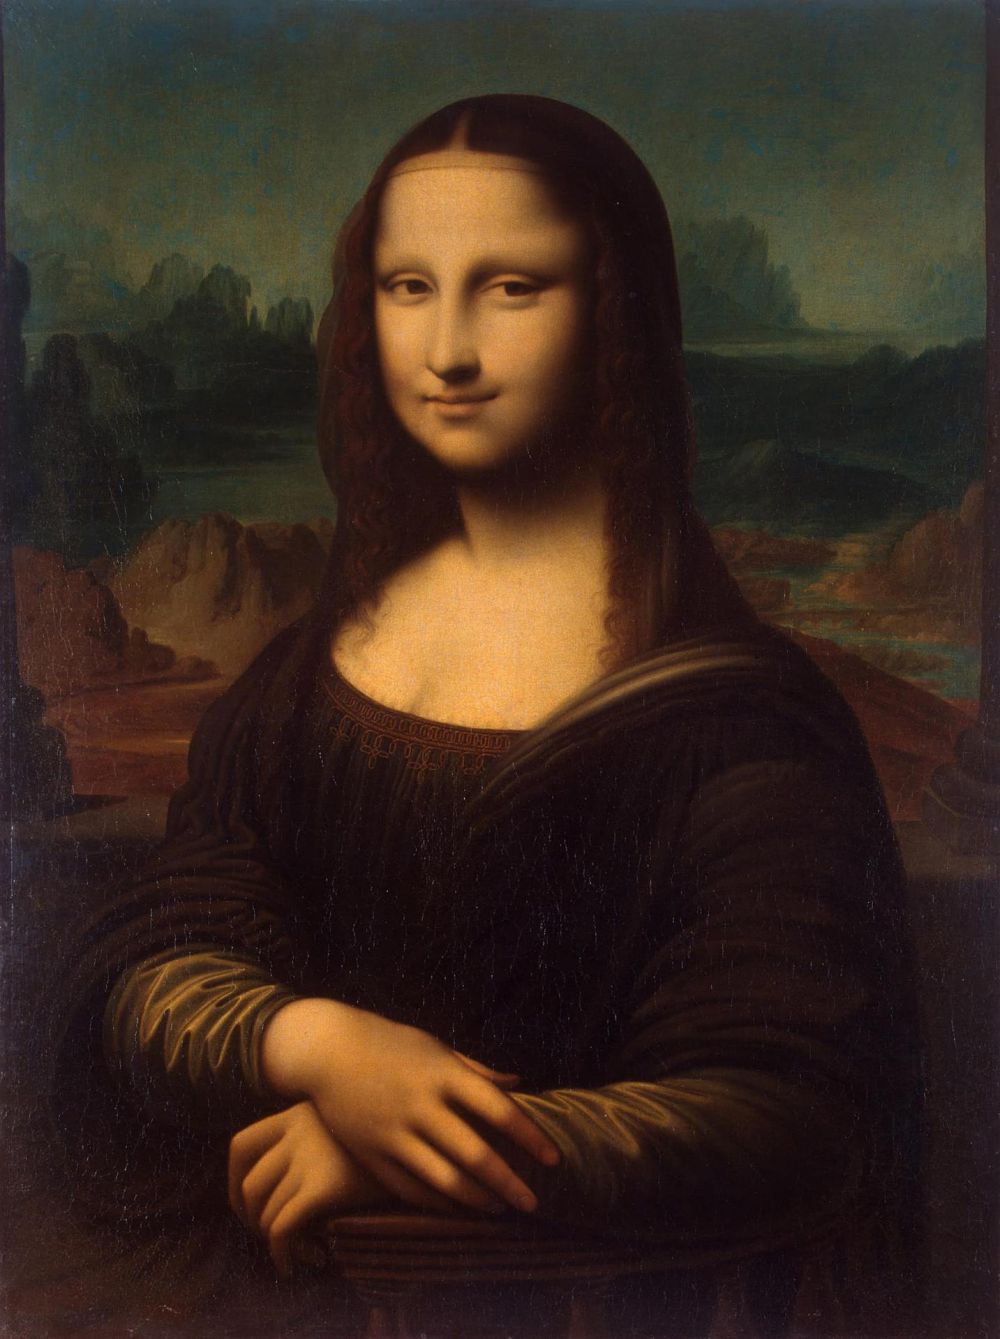 6 Rahasia di balik senyum misterius Mona Lisa, awas kaget